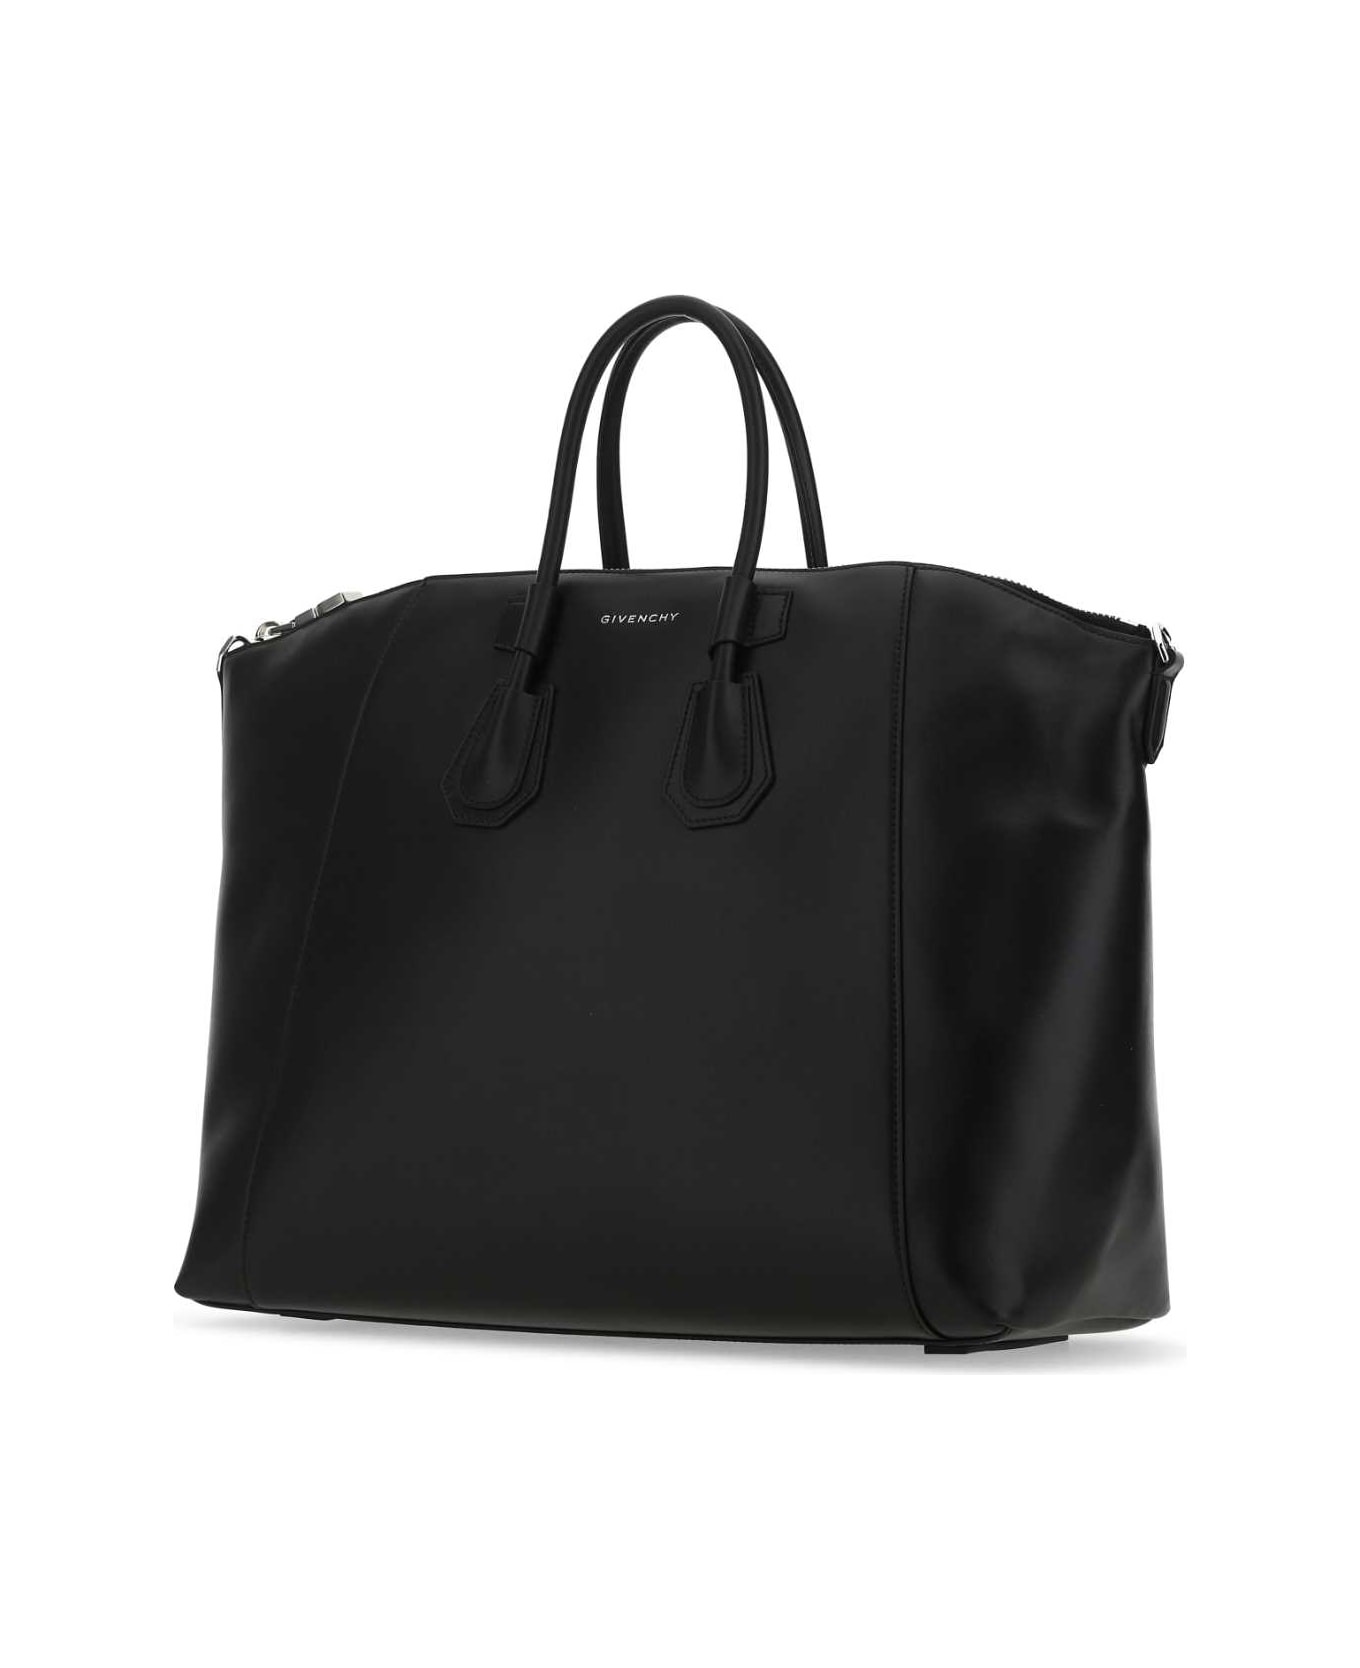 Givenchy Black Leather Medium Antigona Sport Shopping Bag - 001 トートバッグ